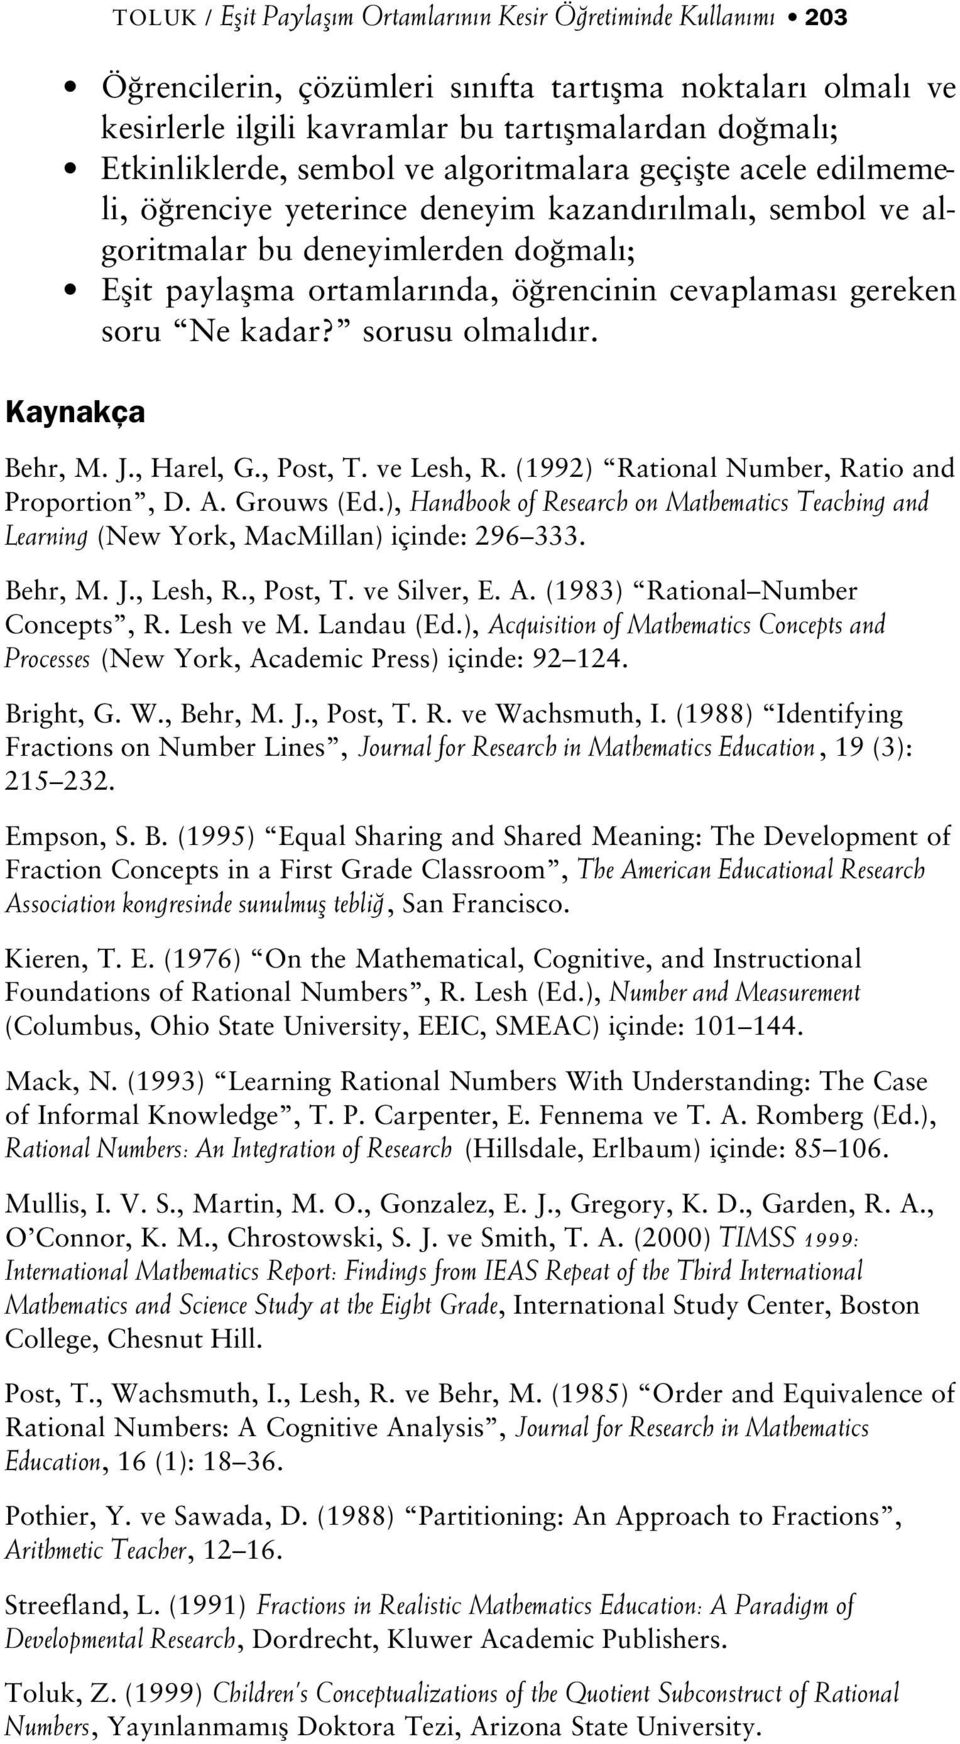 Kaynakça TOLUK / Eflit Paylafl m Ortamlar n n Kesir Ö retiminde Kullan m 203 Behr, M. J., Harel, G., Post, T. ve Lesh, R. (1992) Rational Number, Ratio and Proportion, D. A. Grouws (Ed.